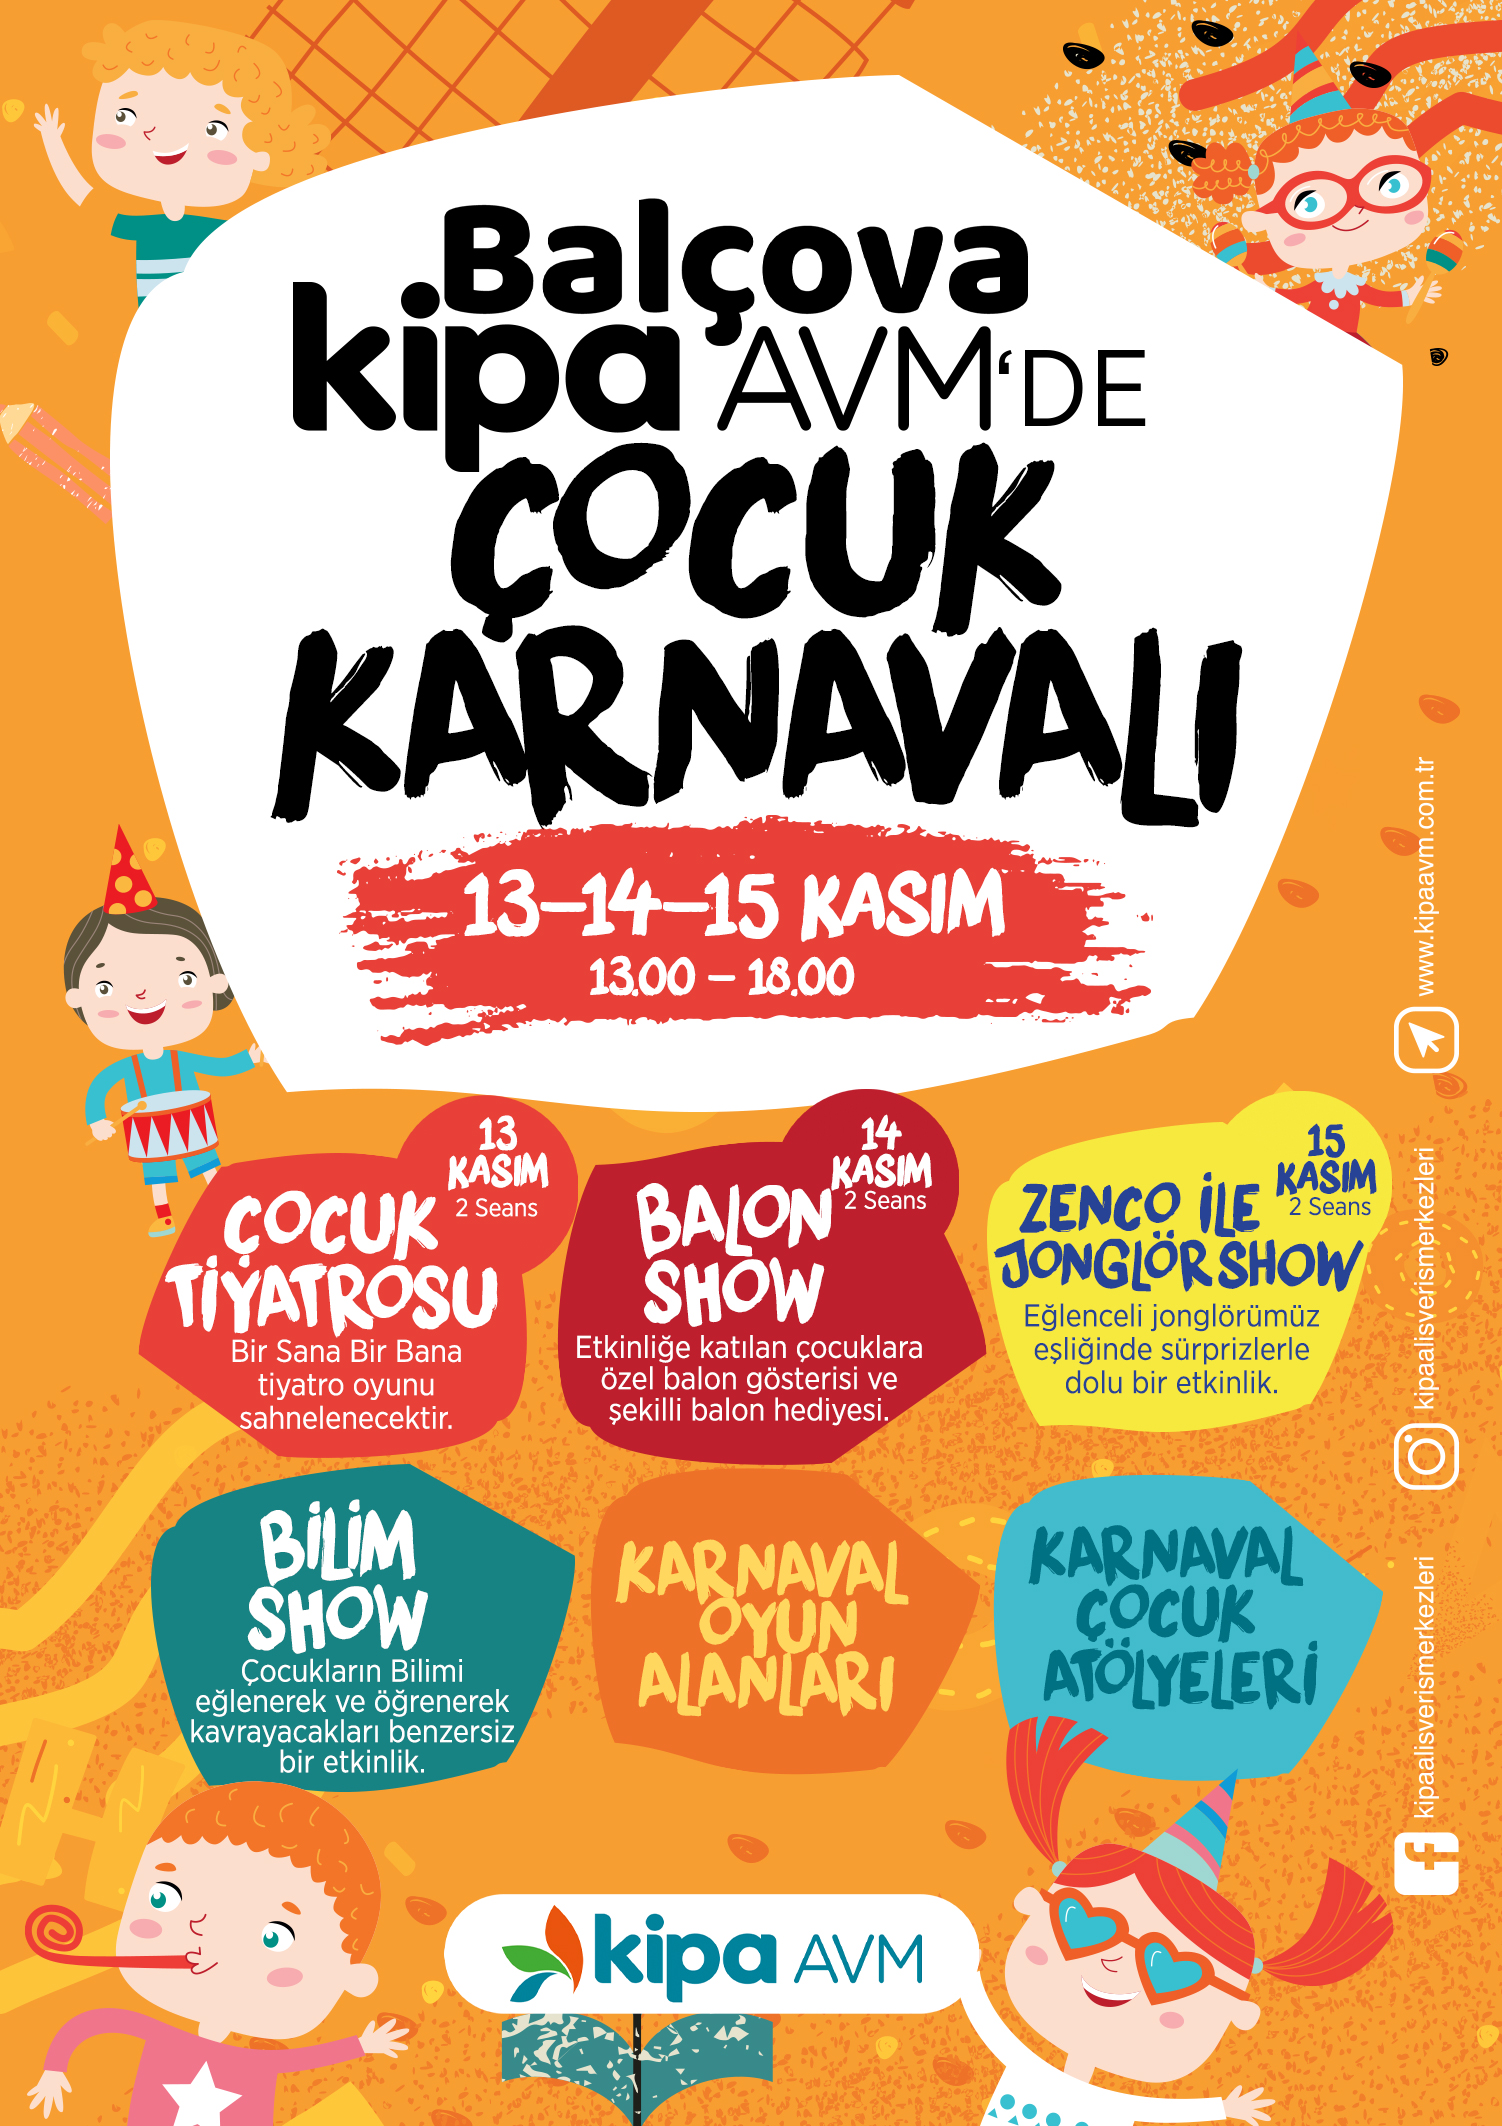 Balçova Kipa AVM'de Çocuk Karnavalı!
